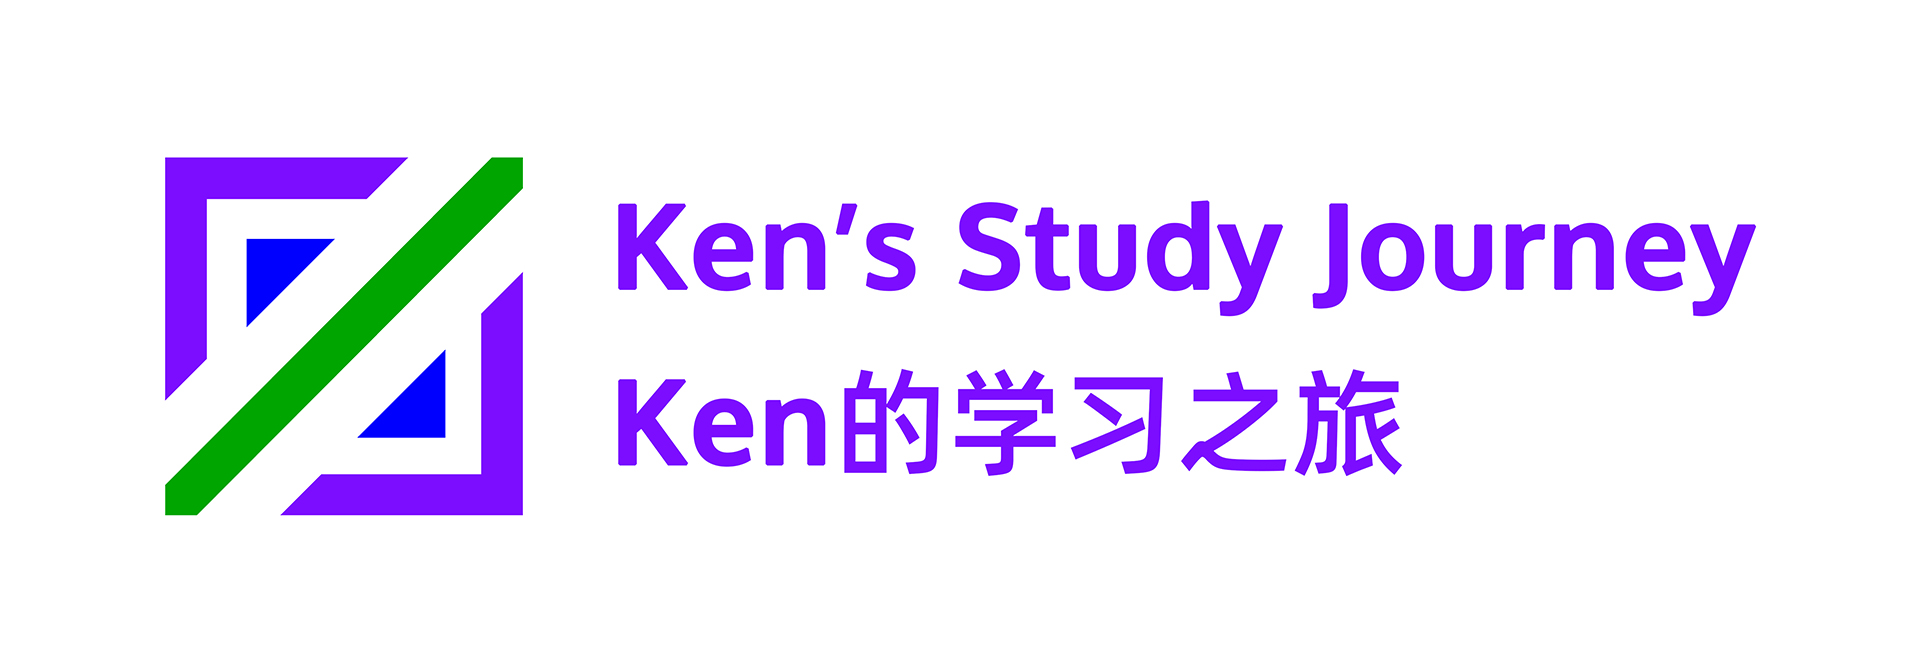 Ken's Study Journey Logo (2021)